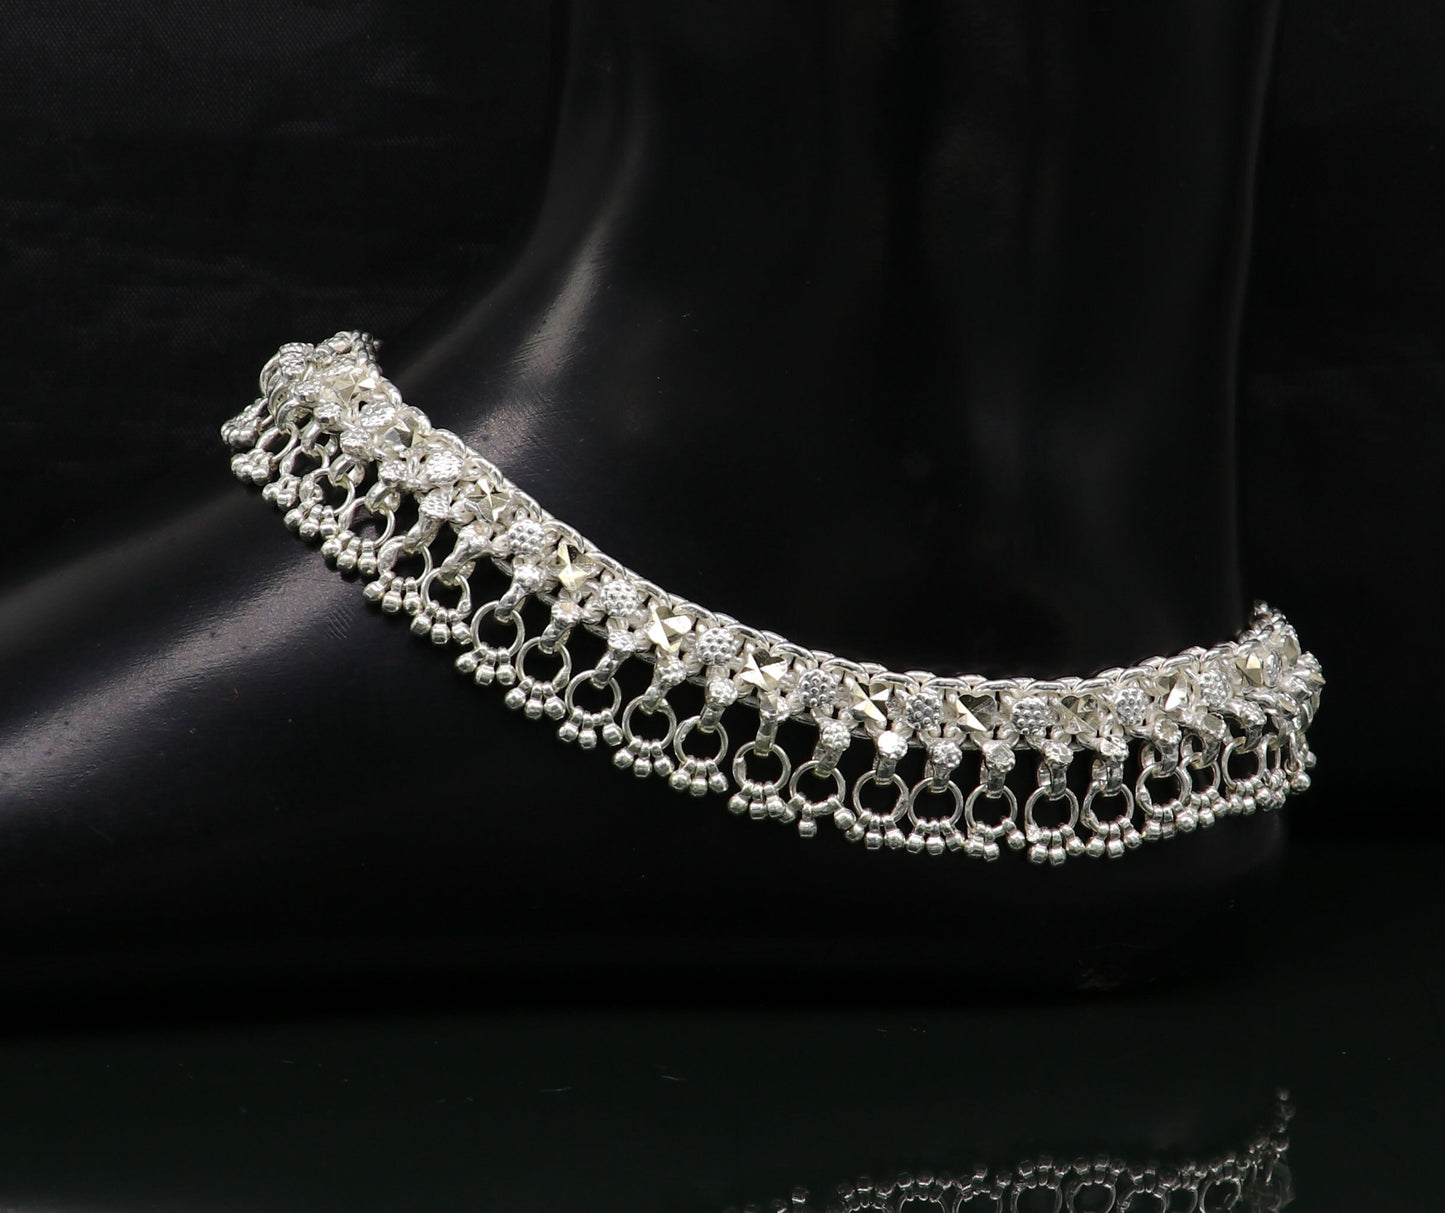 10.5" sterling silver solid customized design ankle bracelet foot bracelet anklet vintage antique design tribal belly dance jewelry ank380 - TRIBAL ORNAMENTS